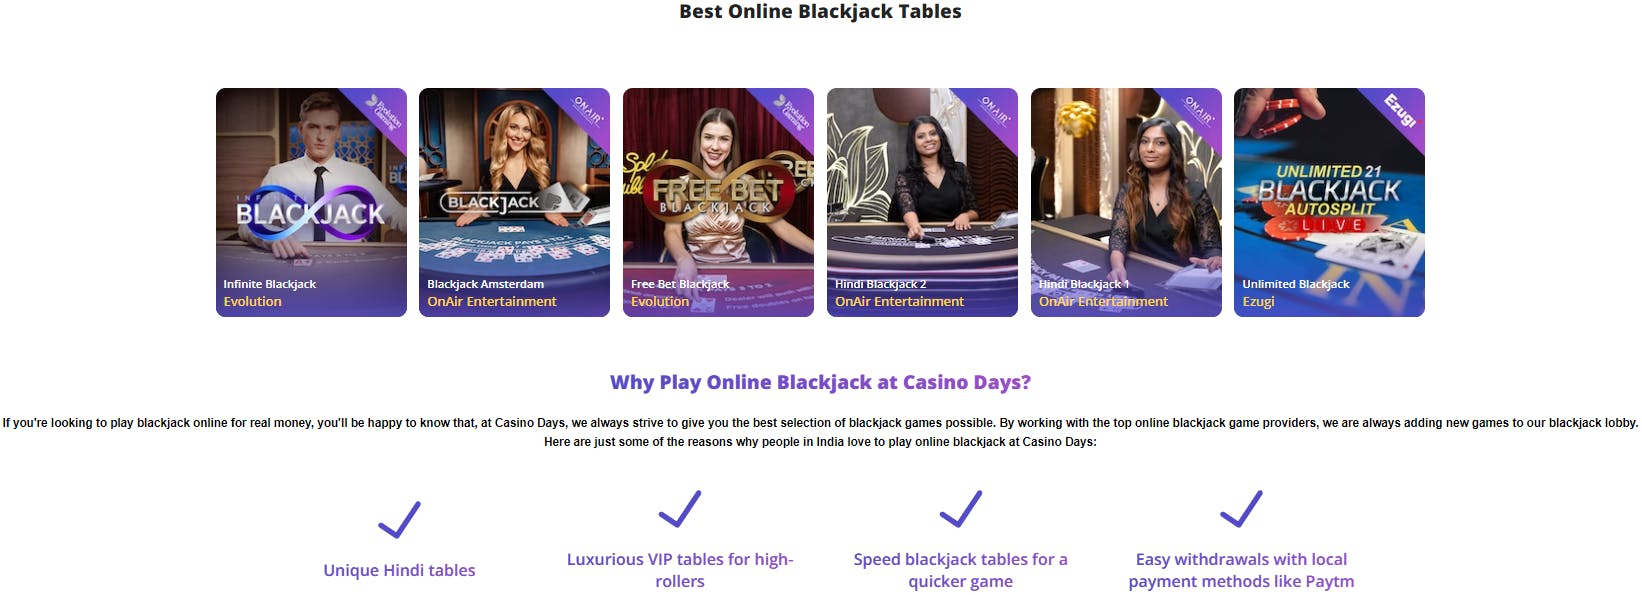 Blackjack games on Casino Days